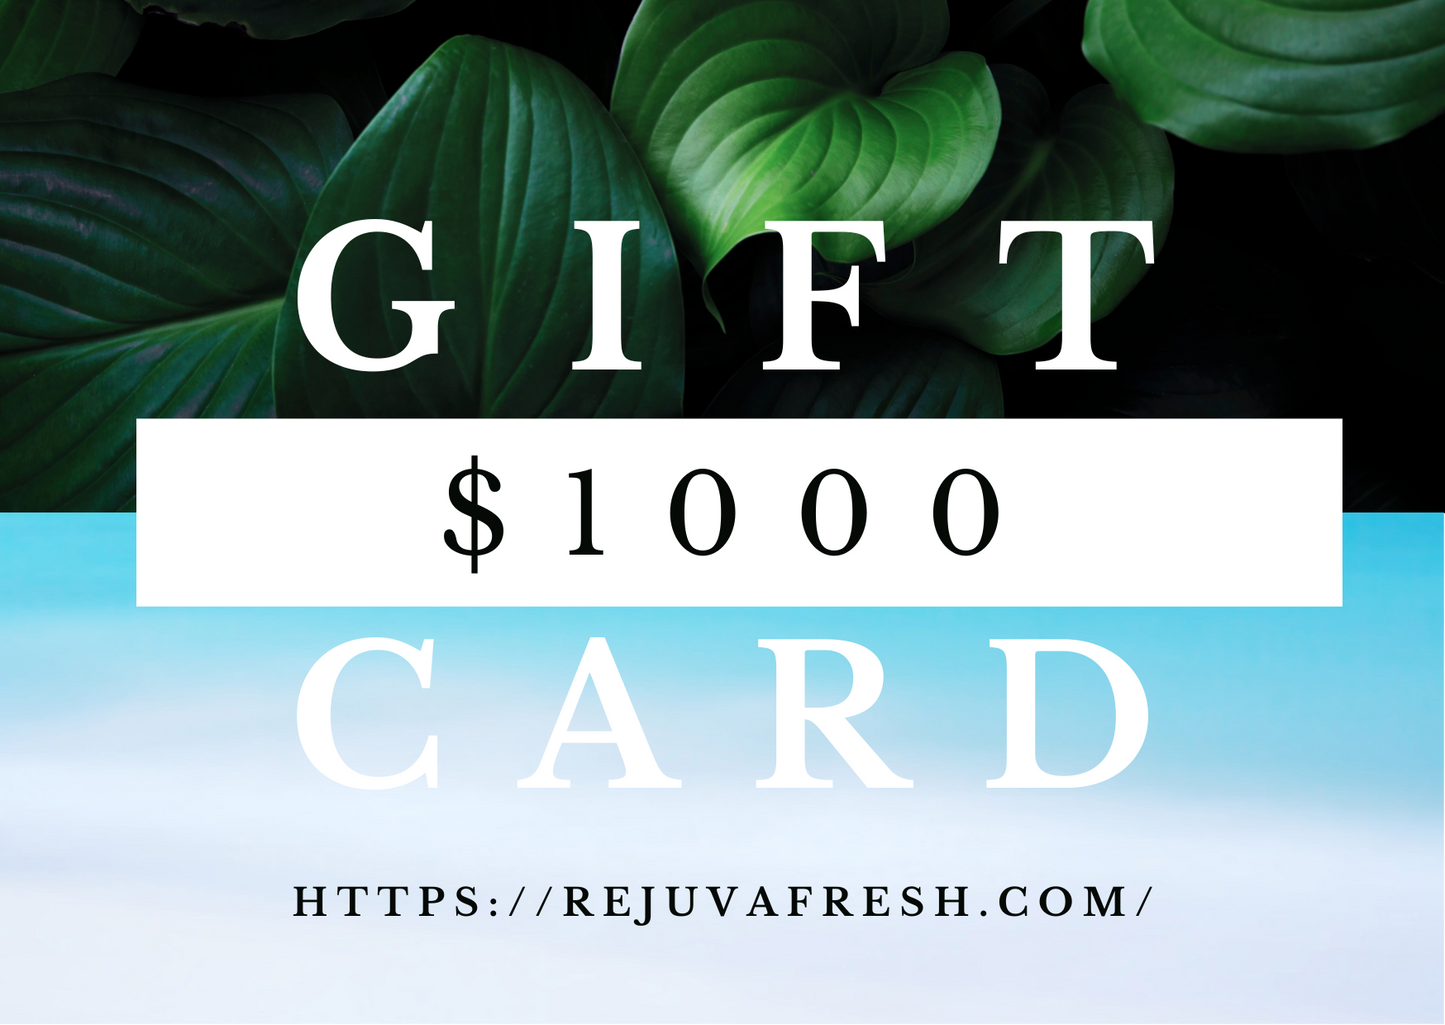 One thousand dollars Gift Card for Rejuva Fresh website, green leaves, blue water